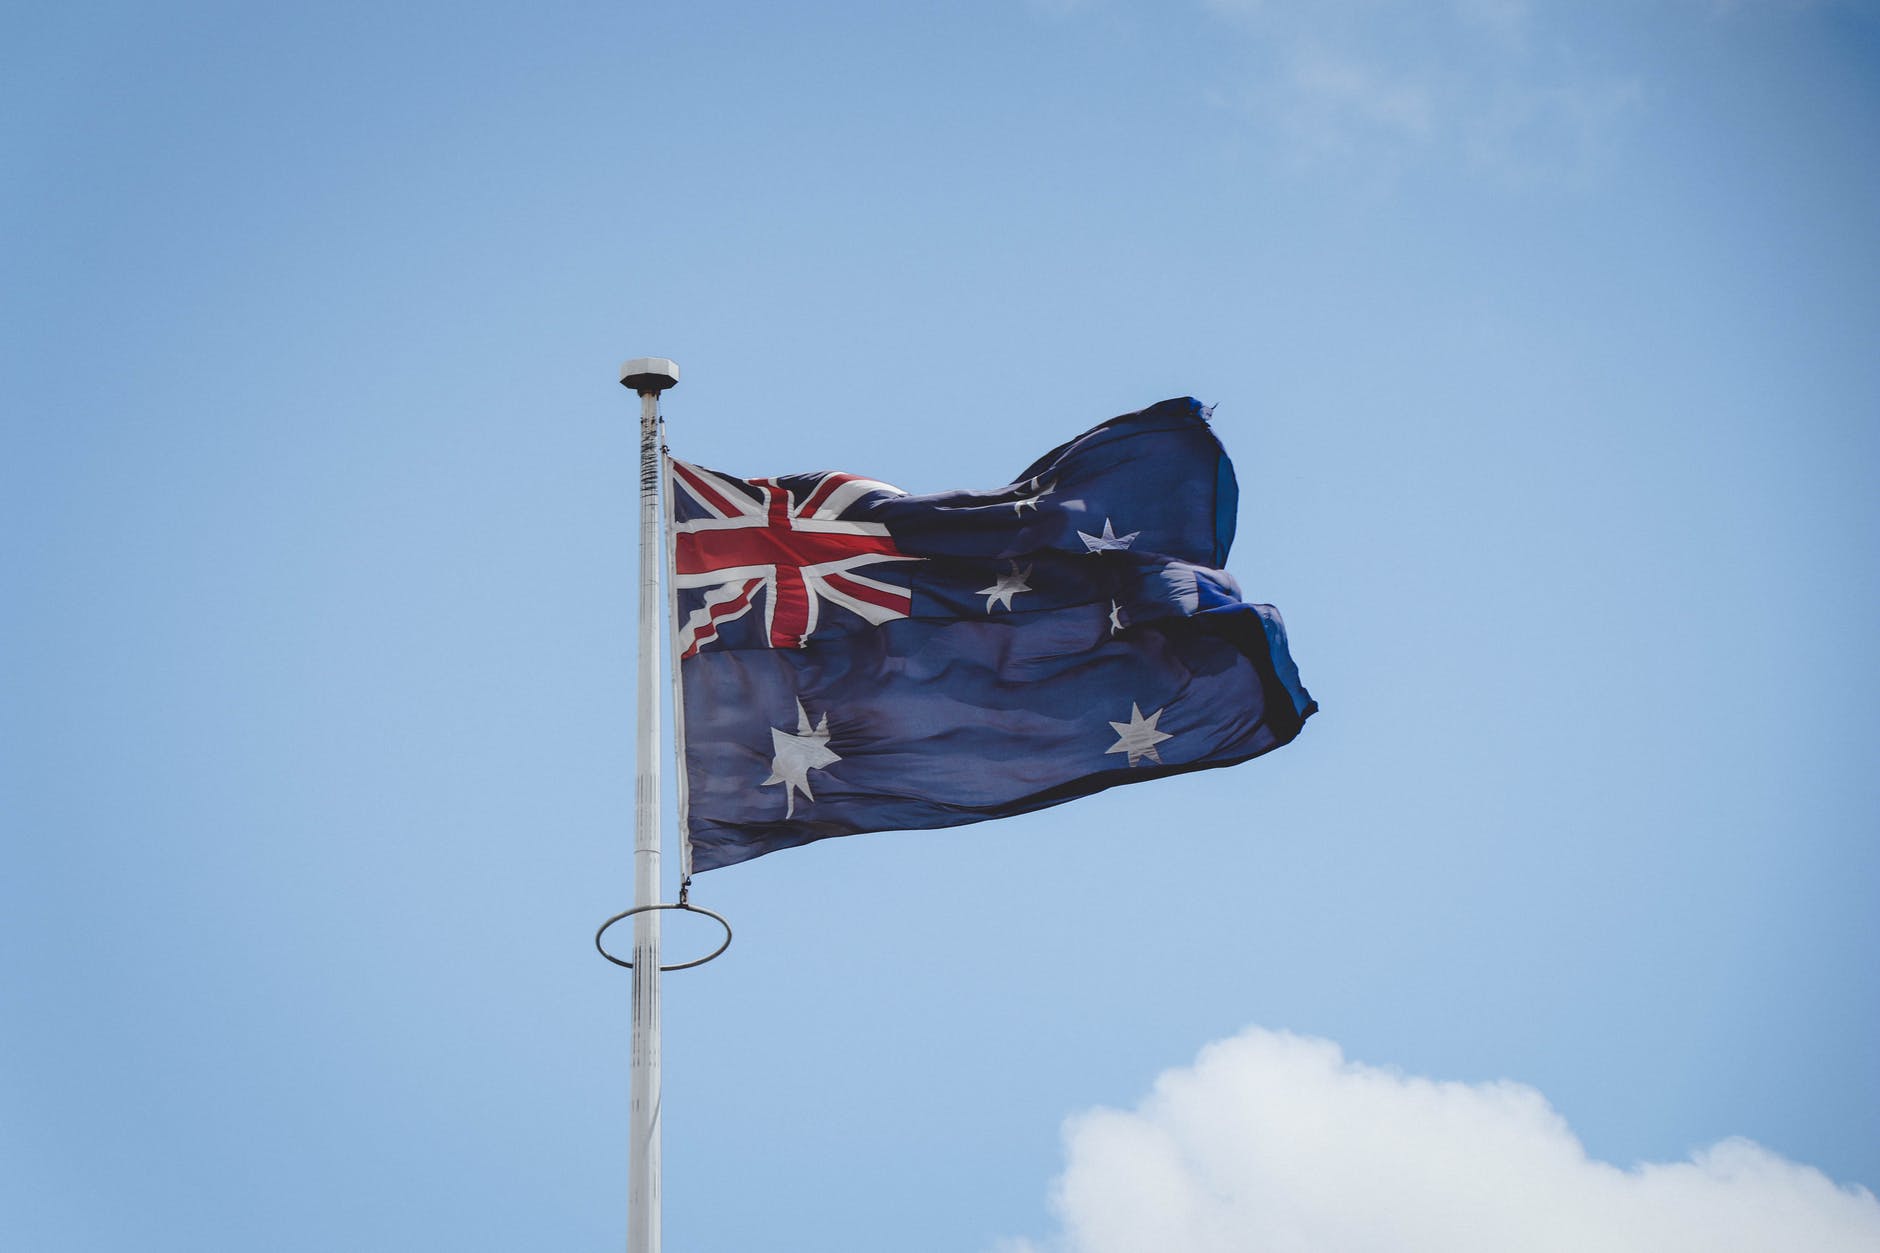 australia bandera